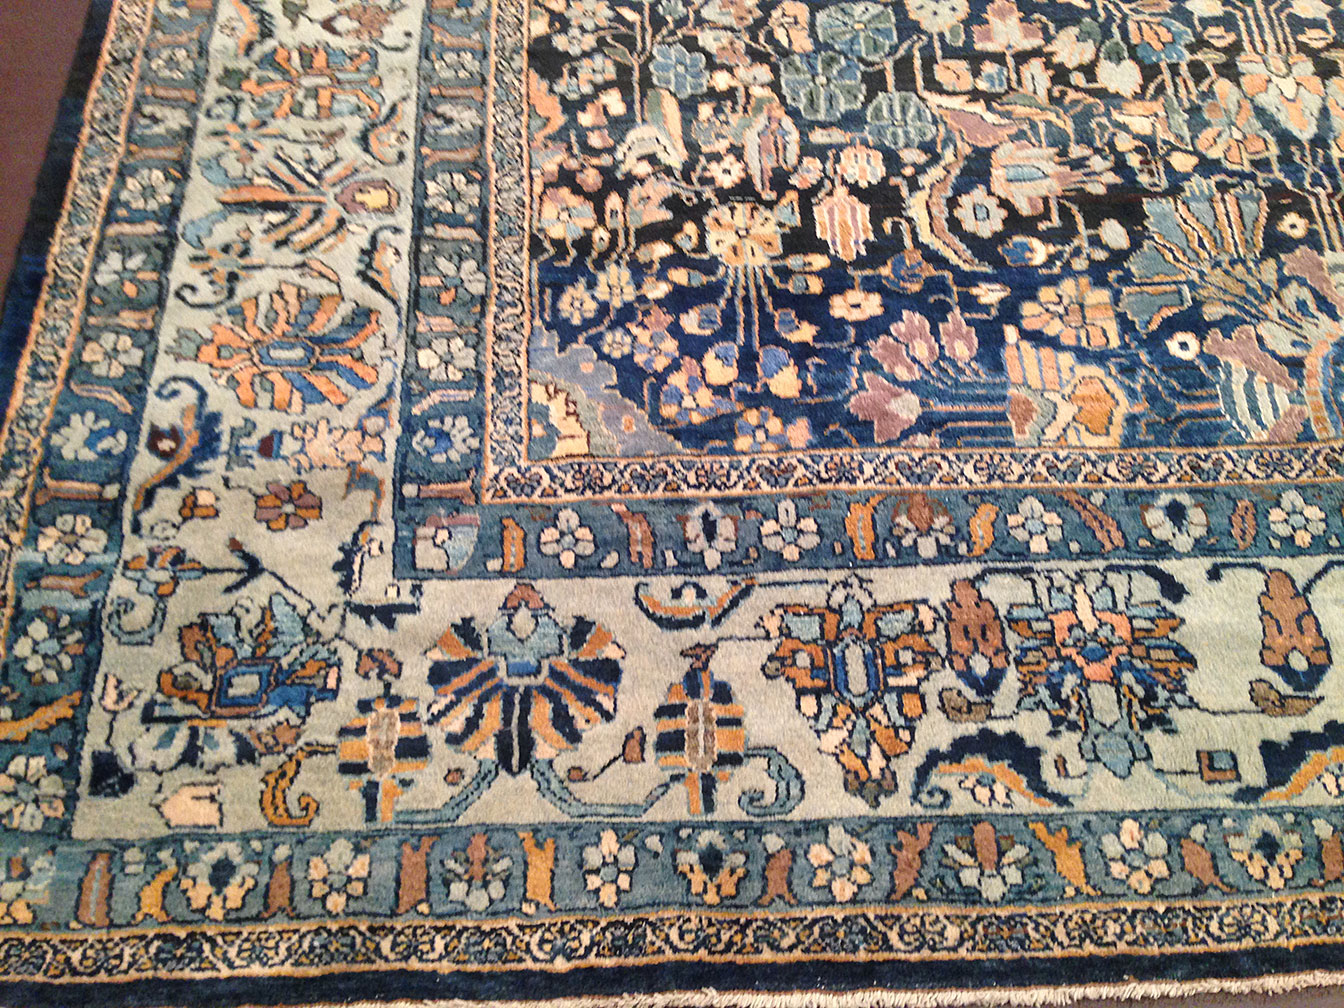 Antique bibi kabad Carpet - # 50688